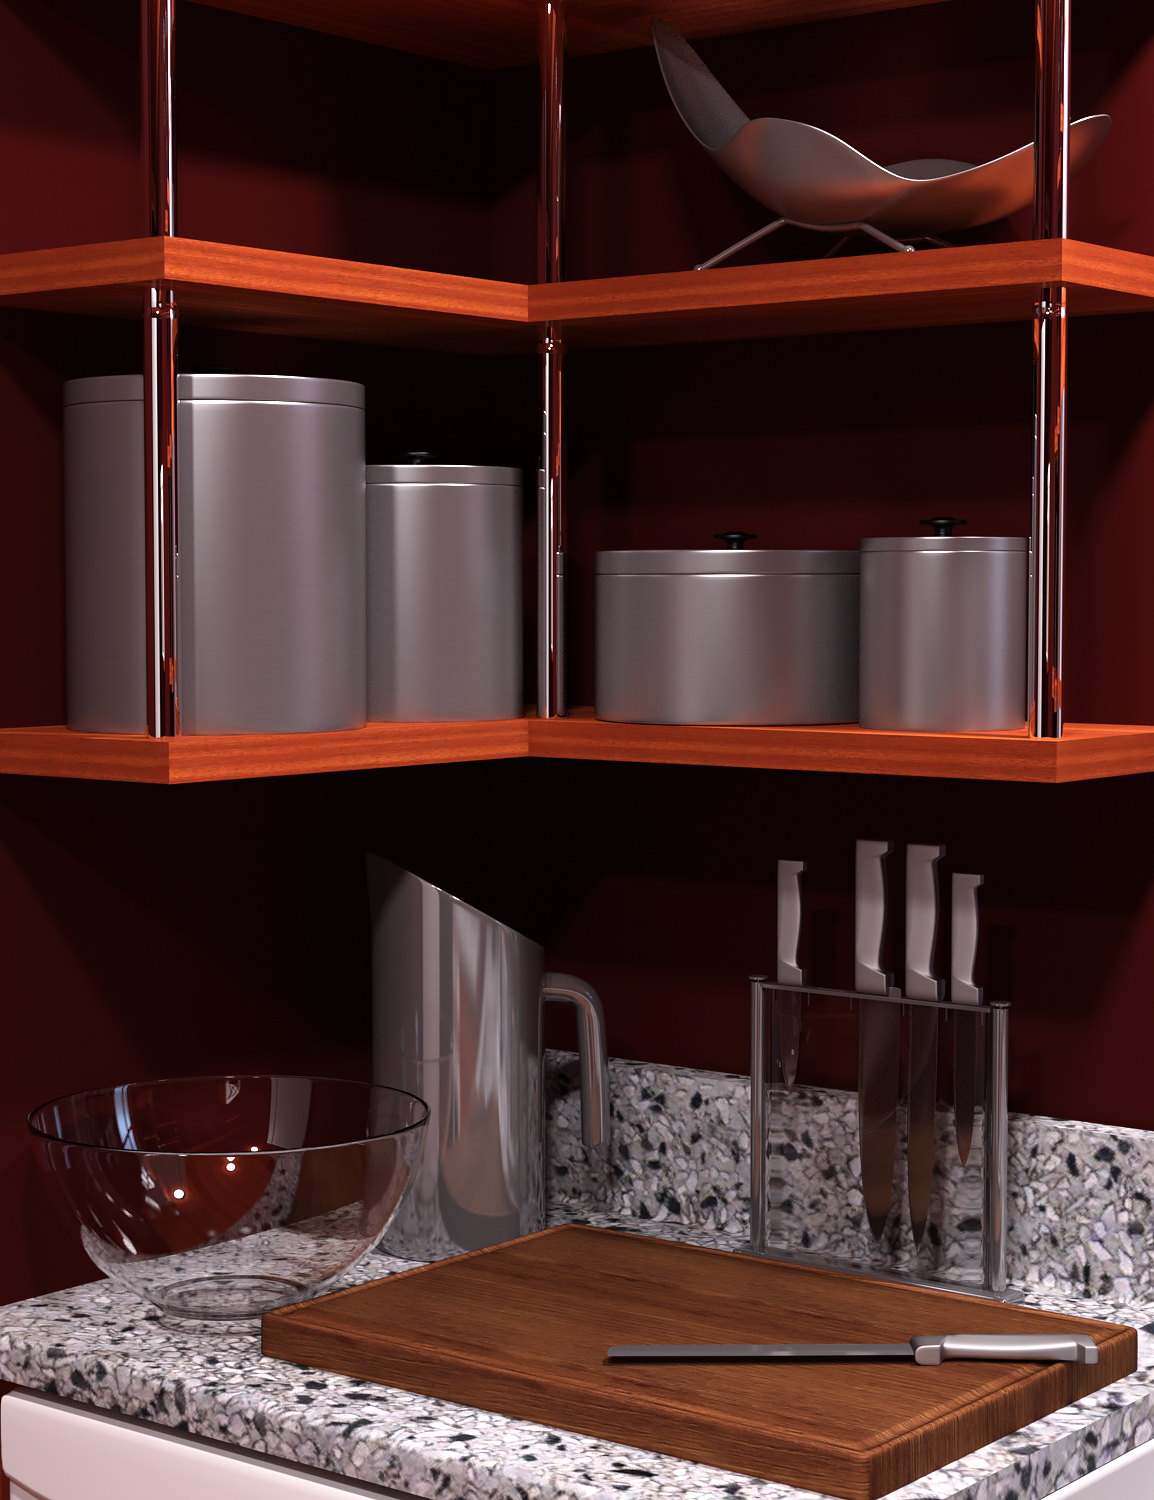 Kitchen Accessories by: dglidden, 3D Models by Daz 3D